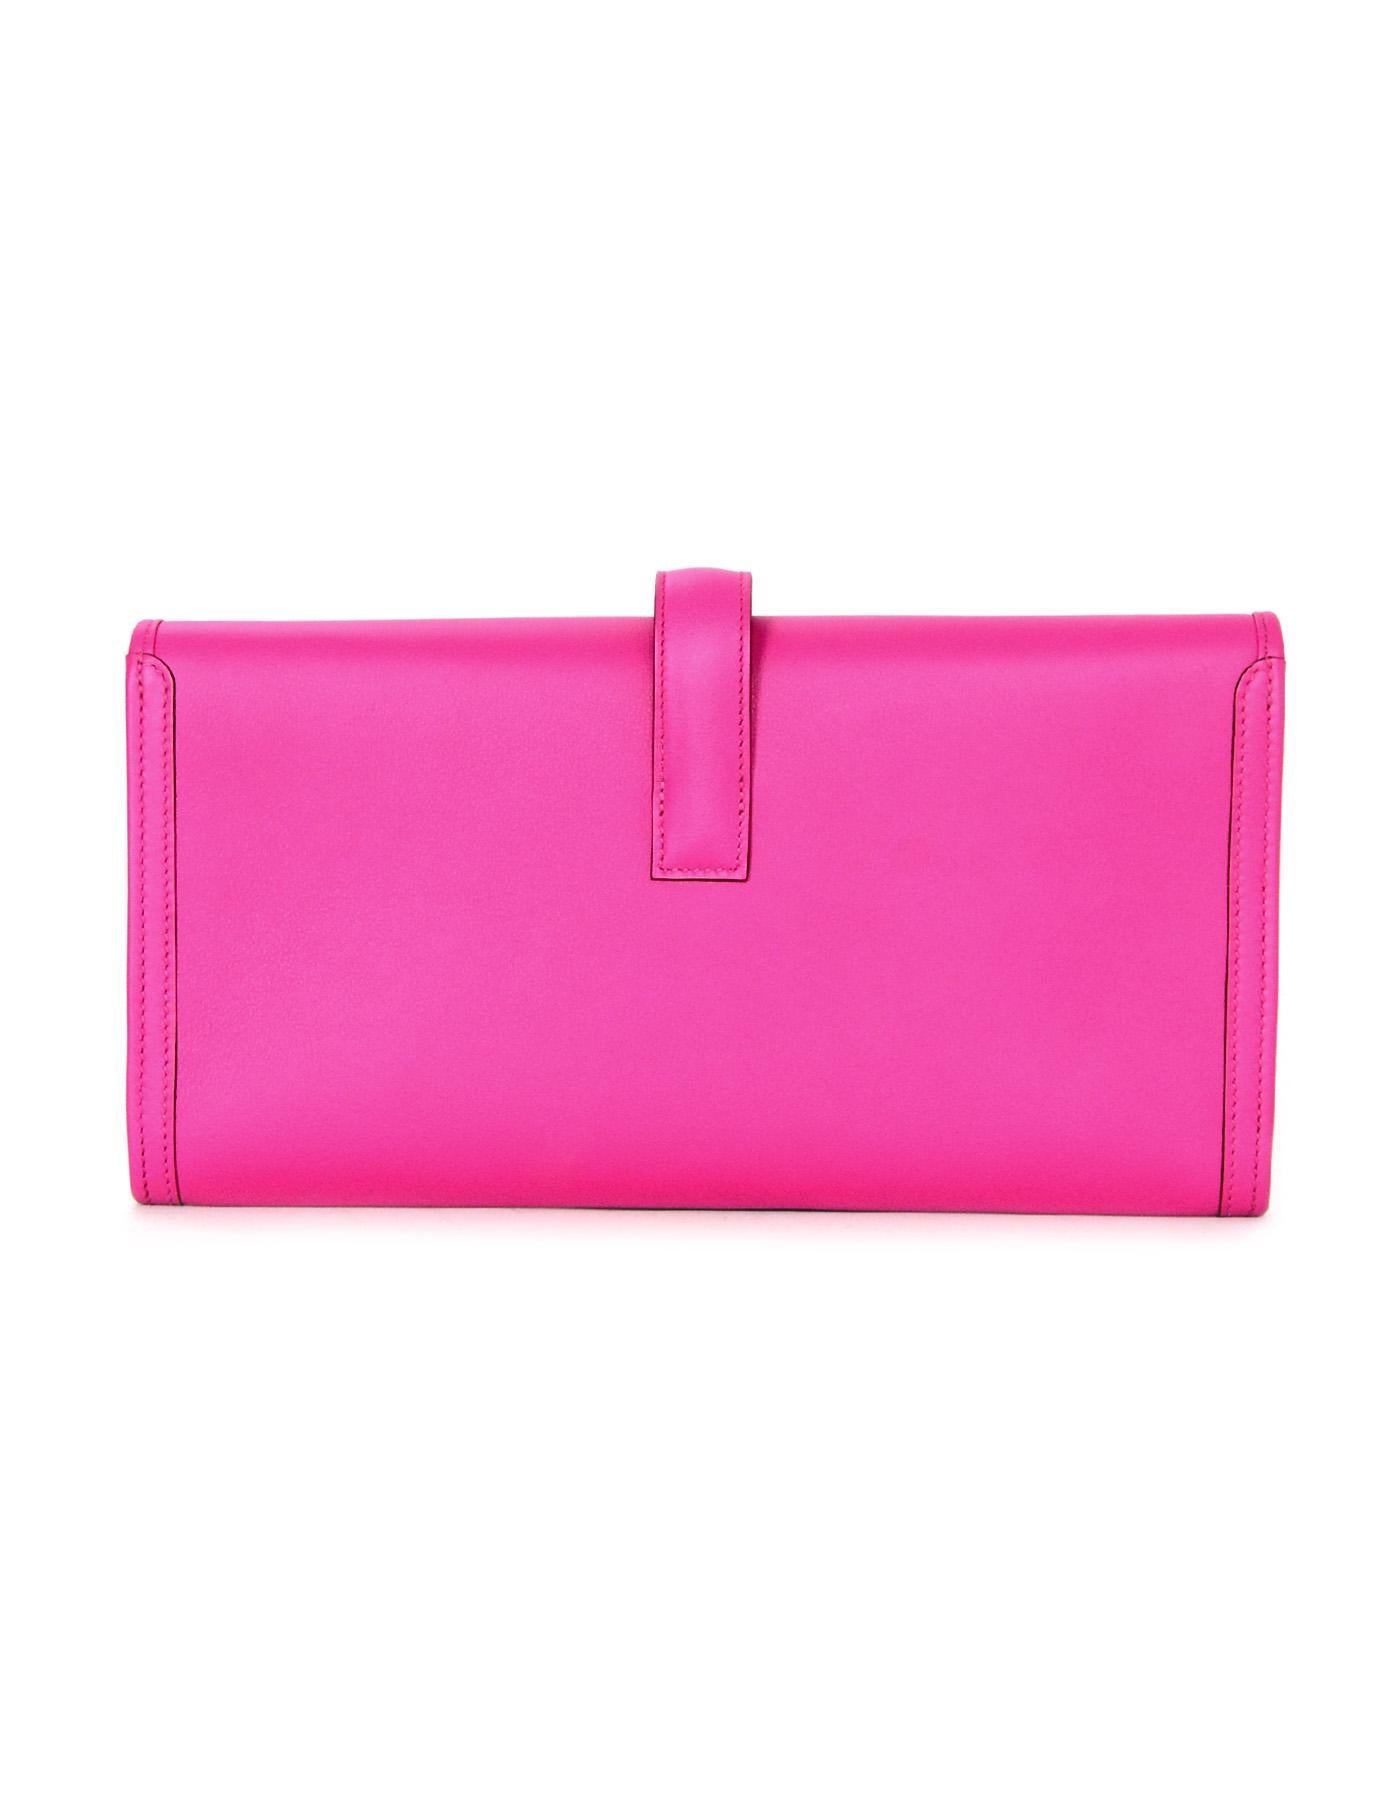 Pink Hermes Magnolia Swift Leather Jige Elan 29 Clutch Bag